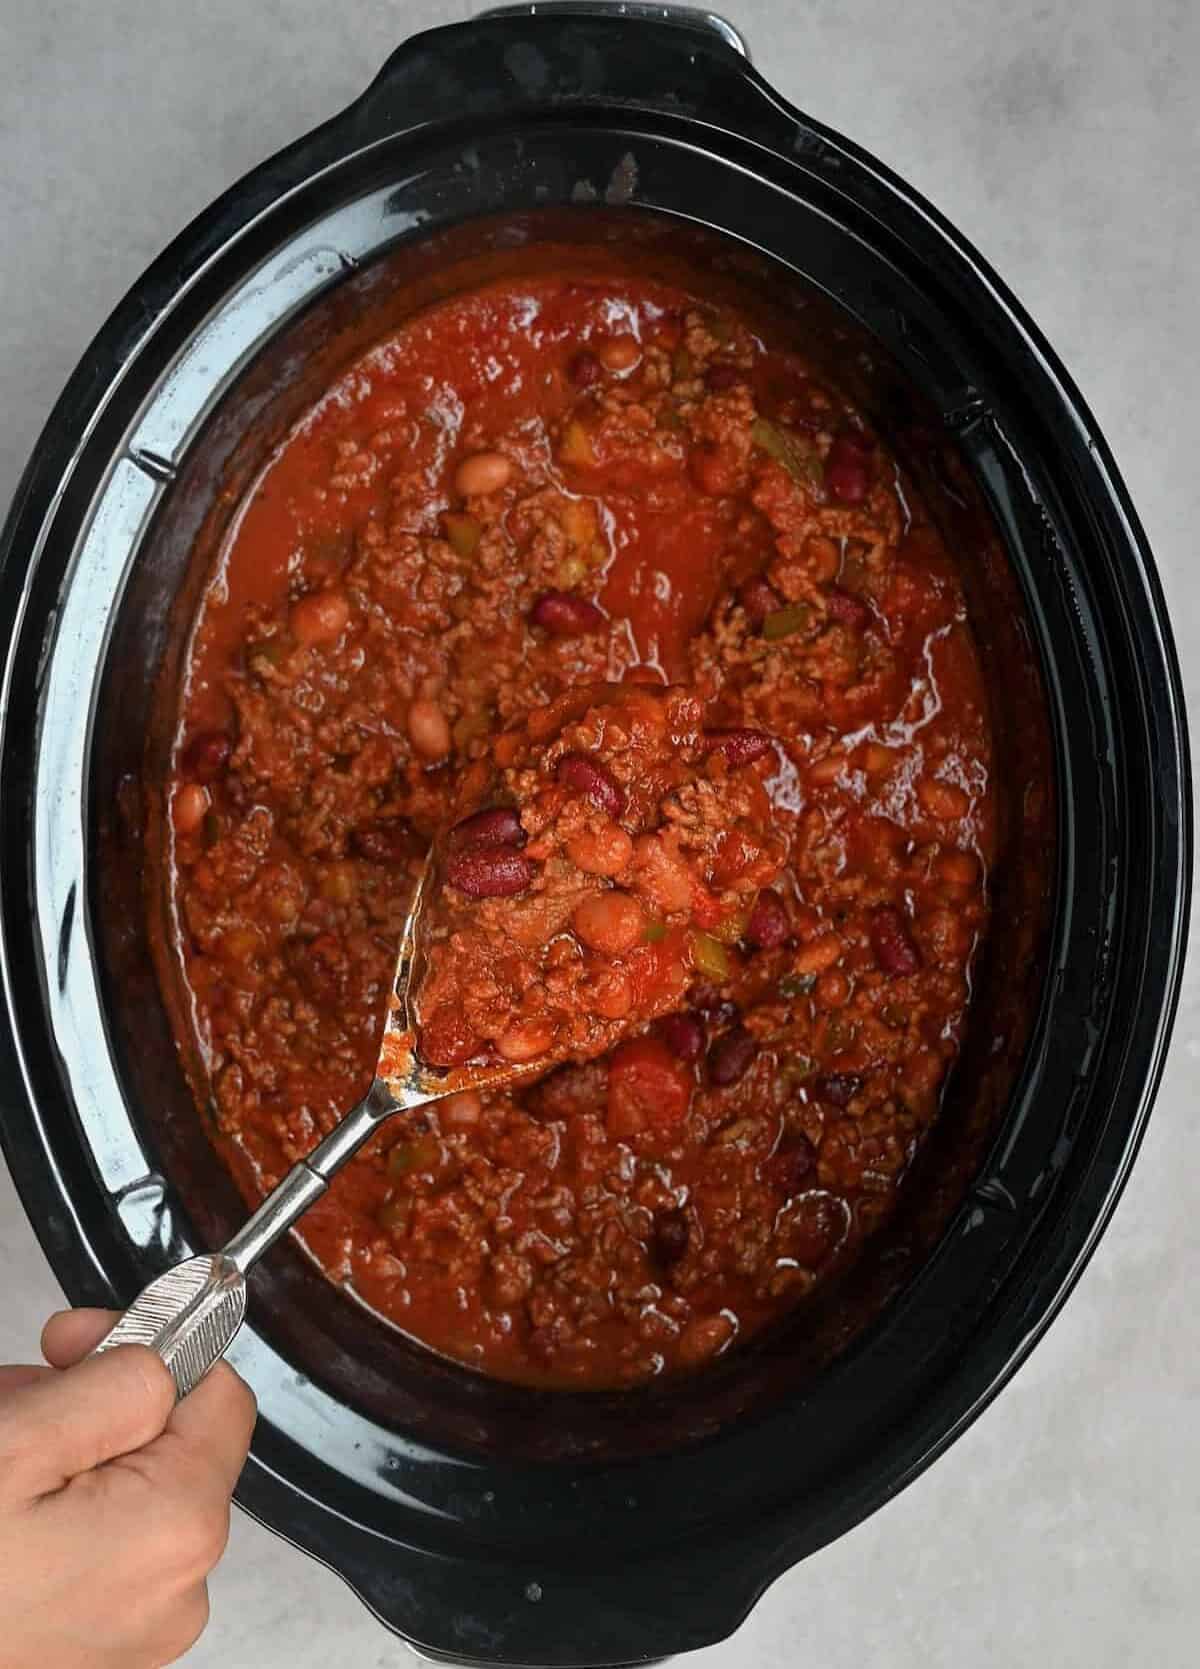 Wendy's chili recipe inside a crock pot